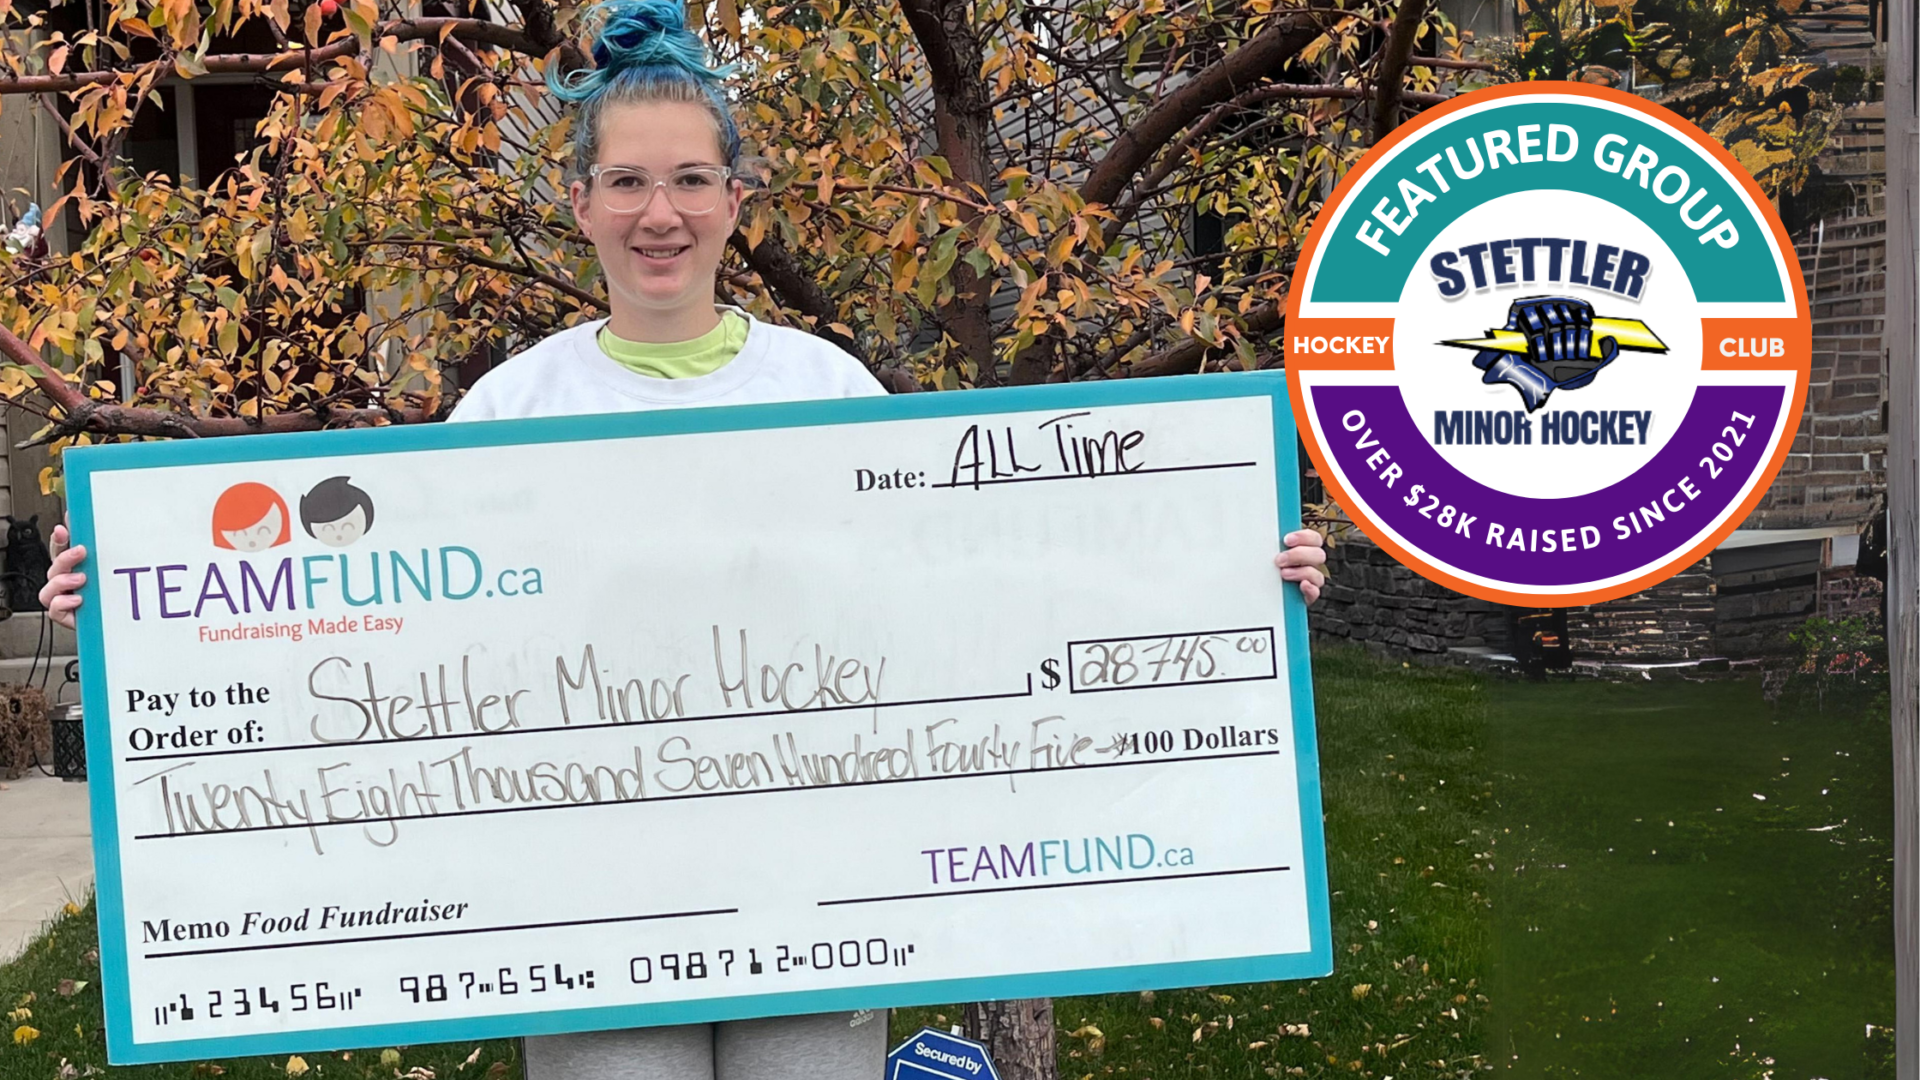 Stettler Minor Hockey Association has raised $28,745 in three years.